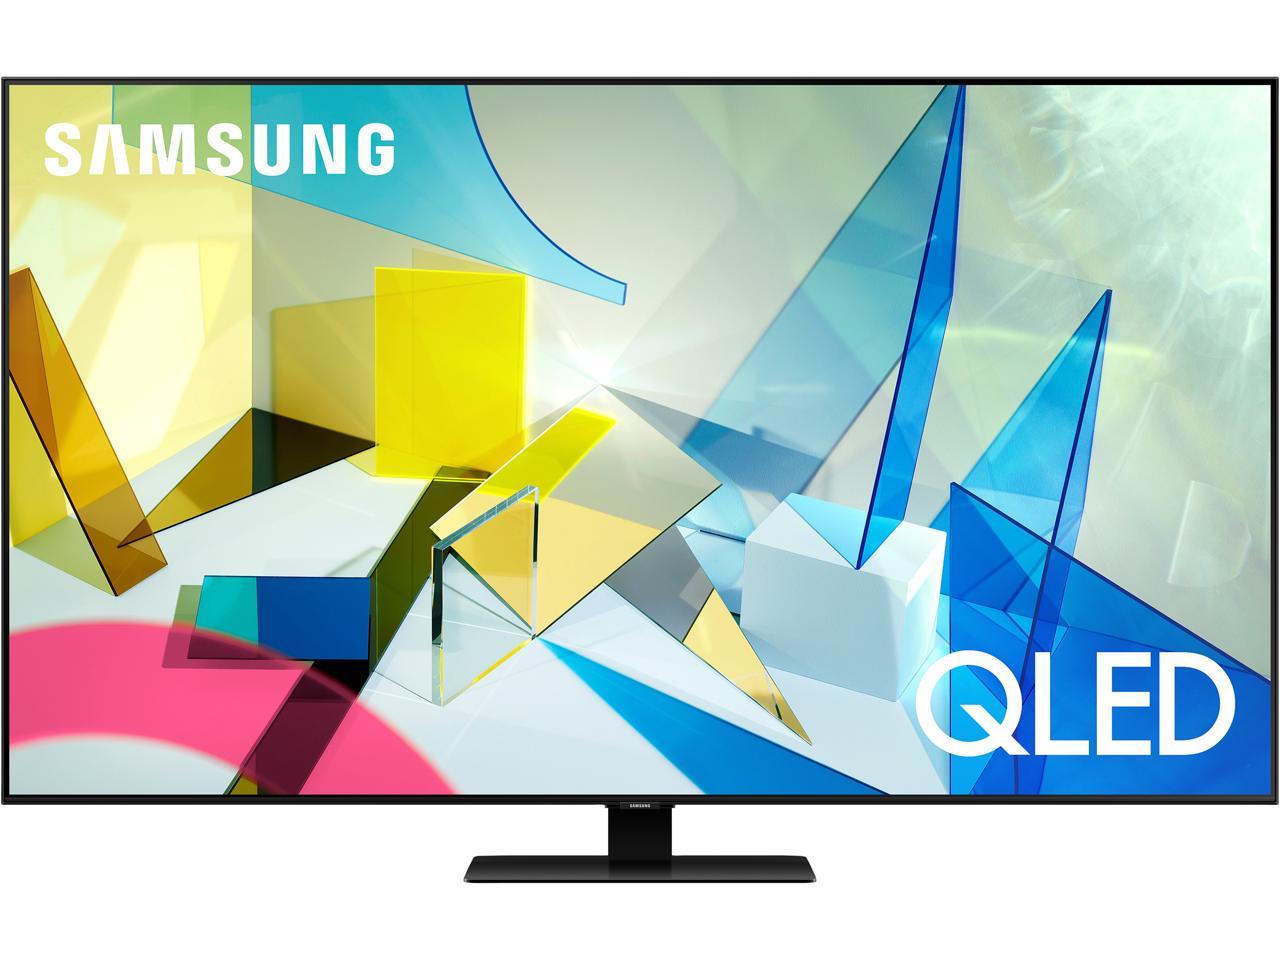 Samsung 65" Class Q80T Series QLED 4K UHD HDR Smart TV